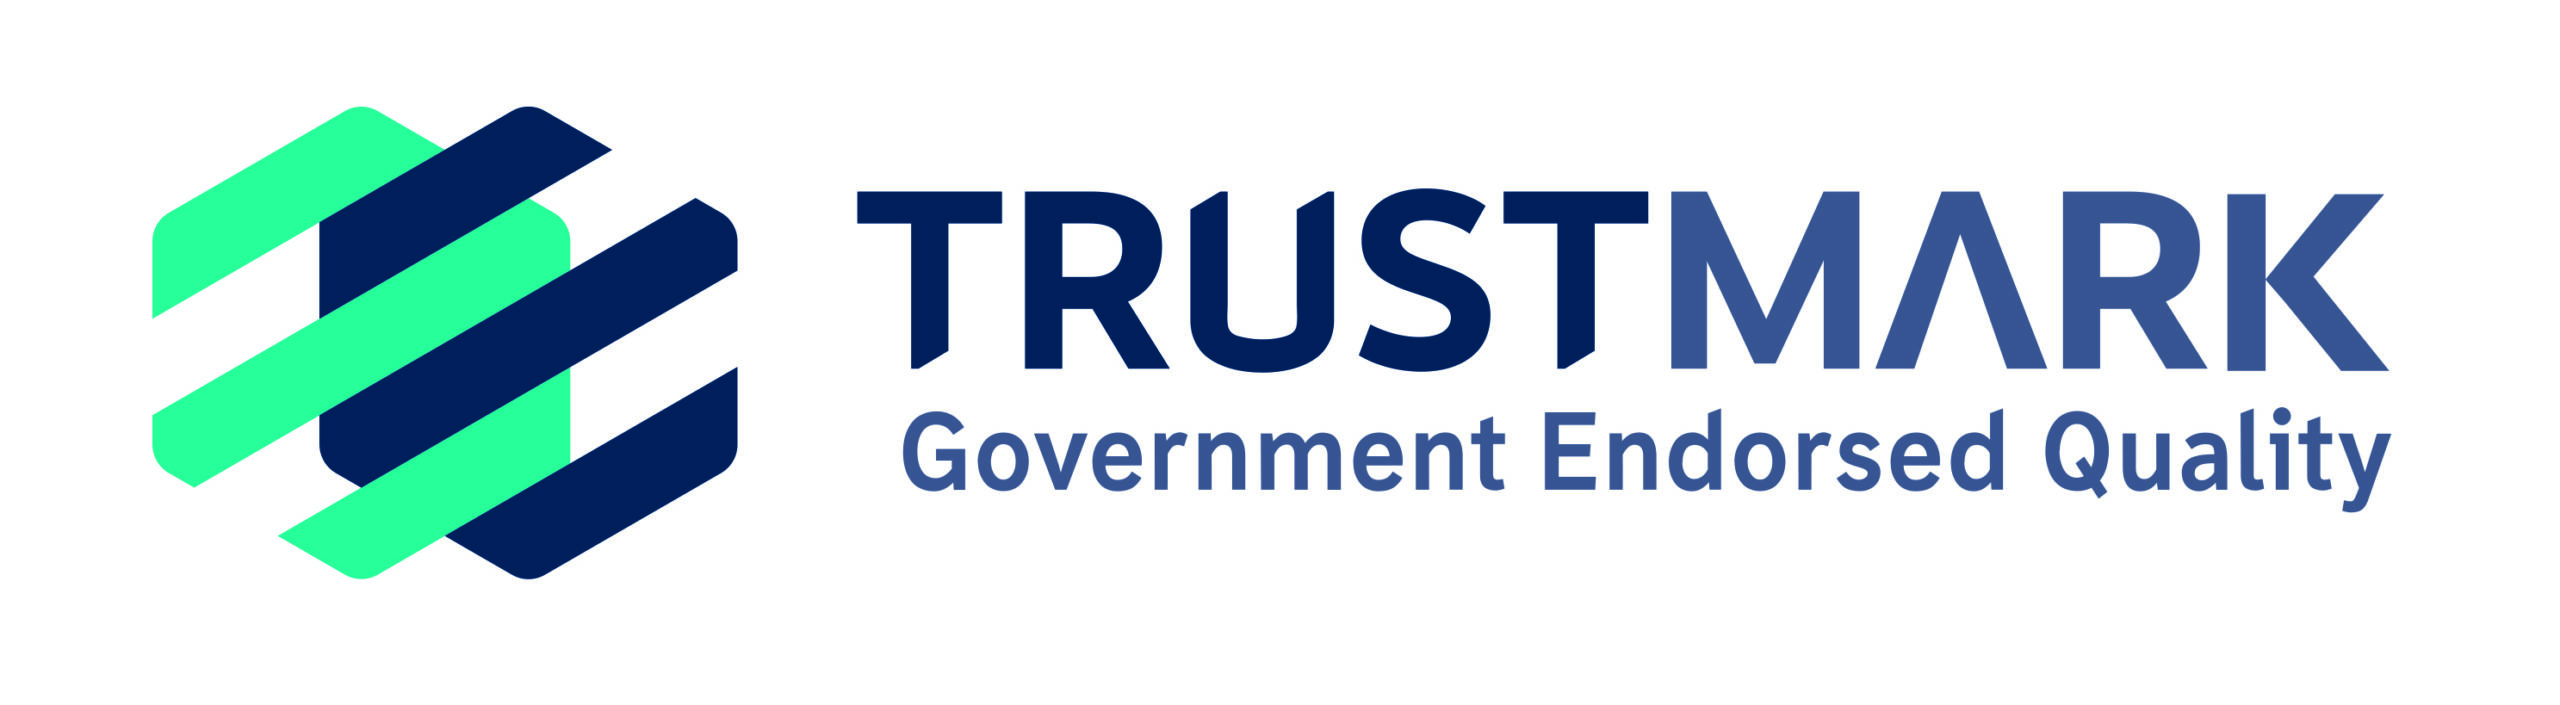 trustmark-logo-scaled